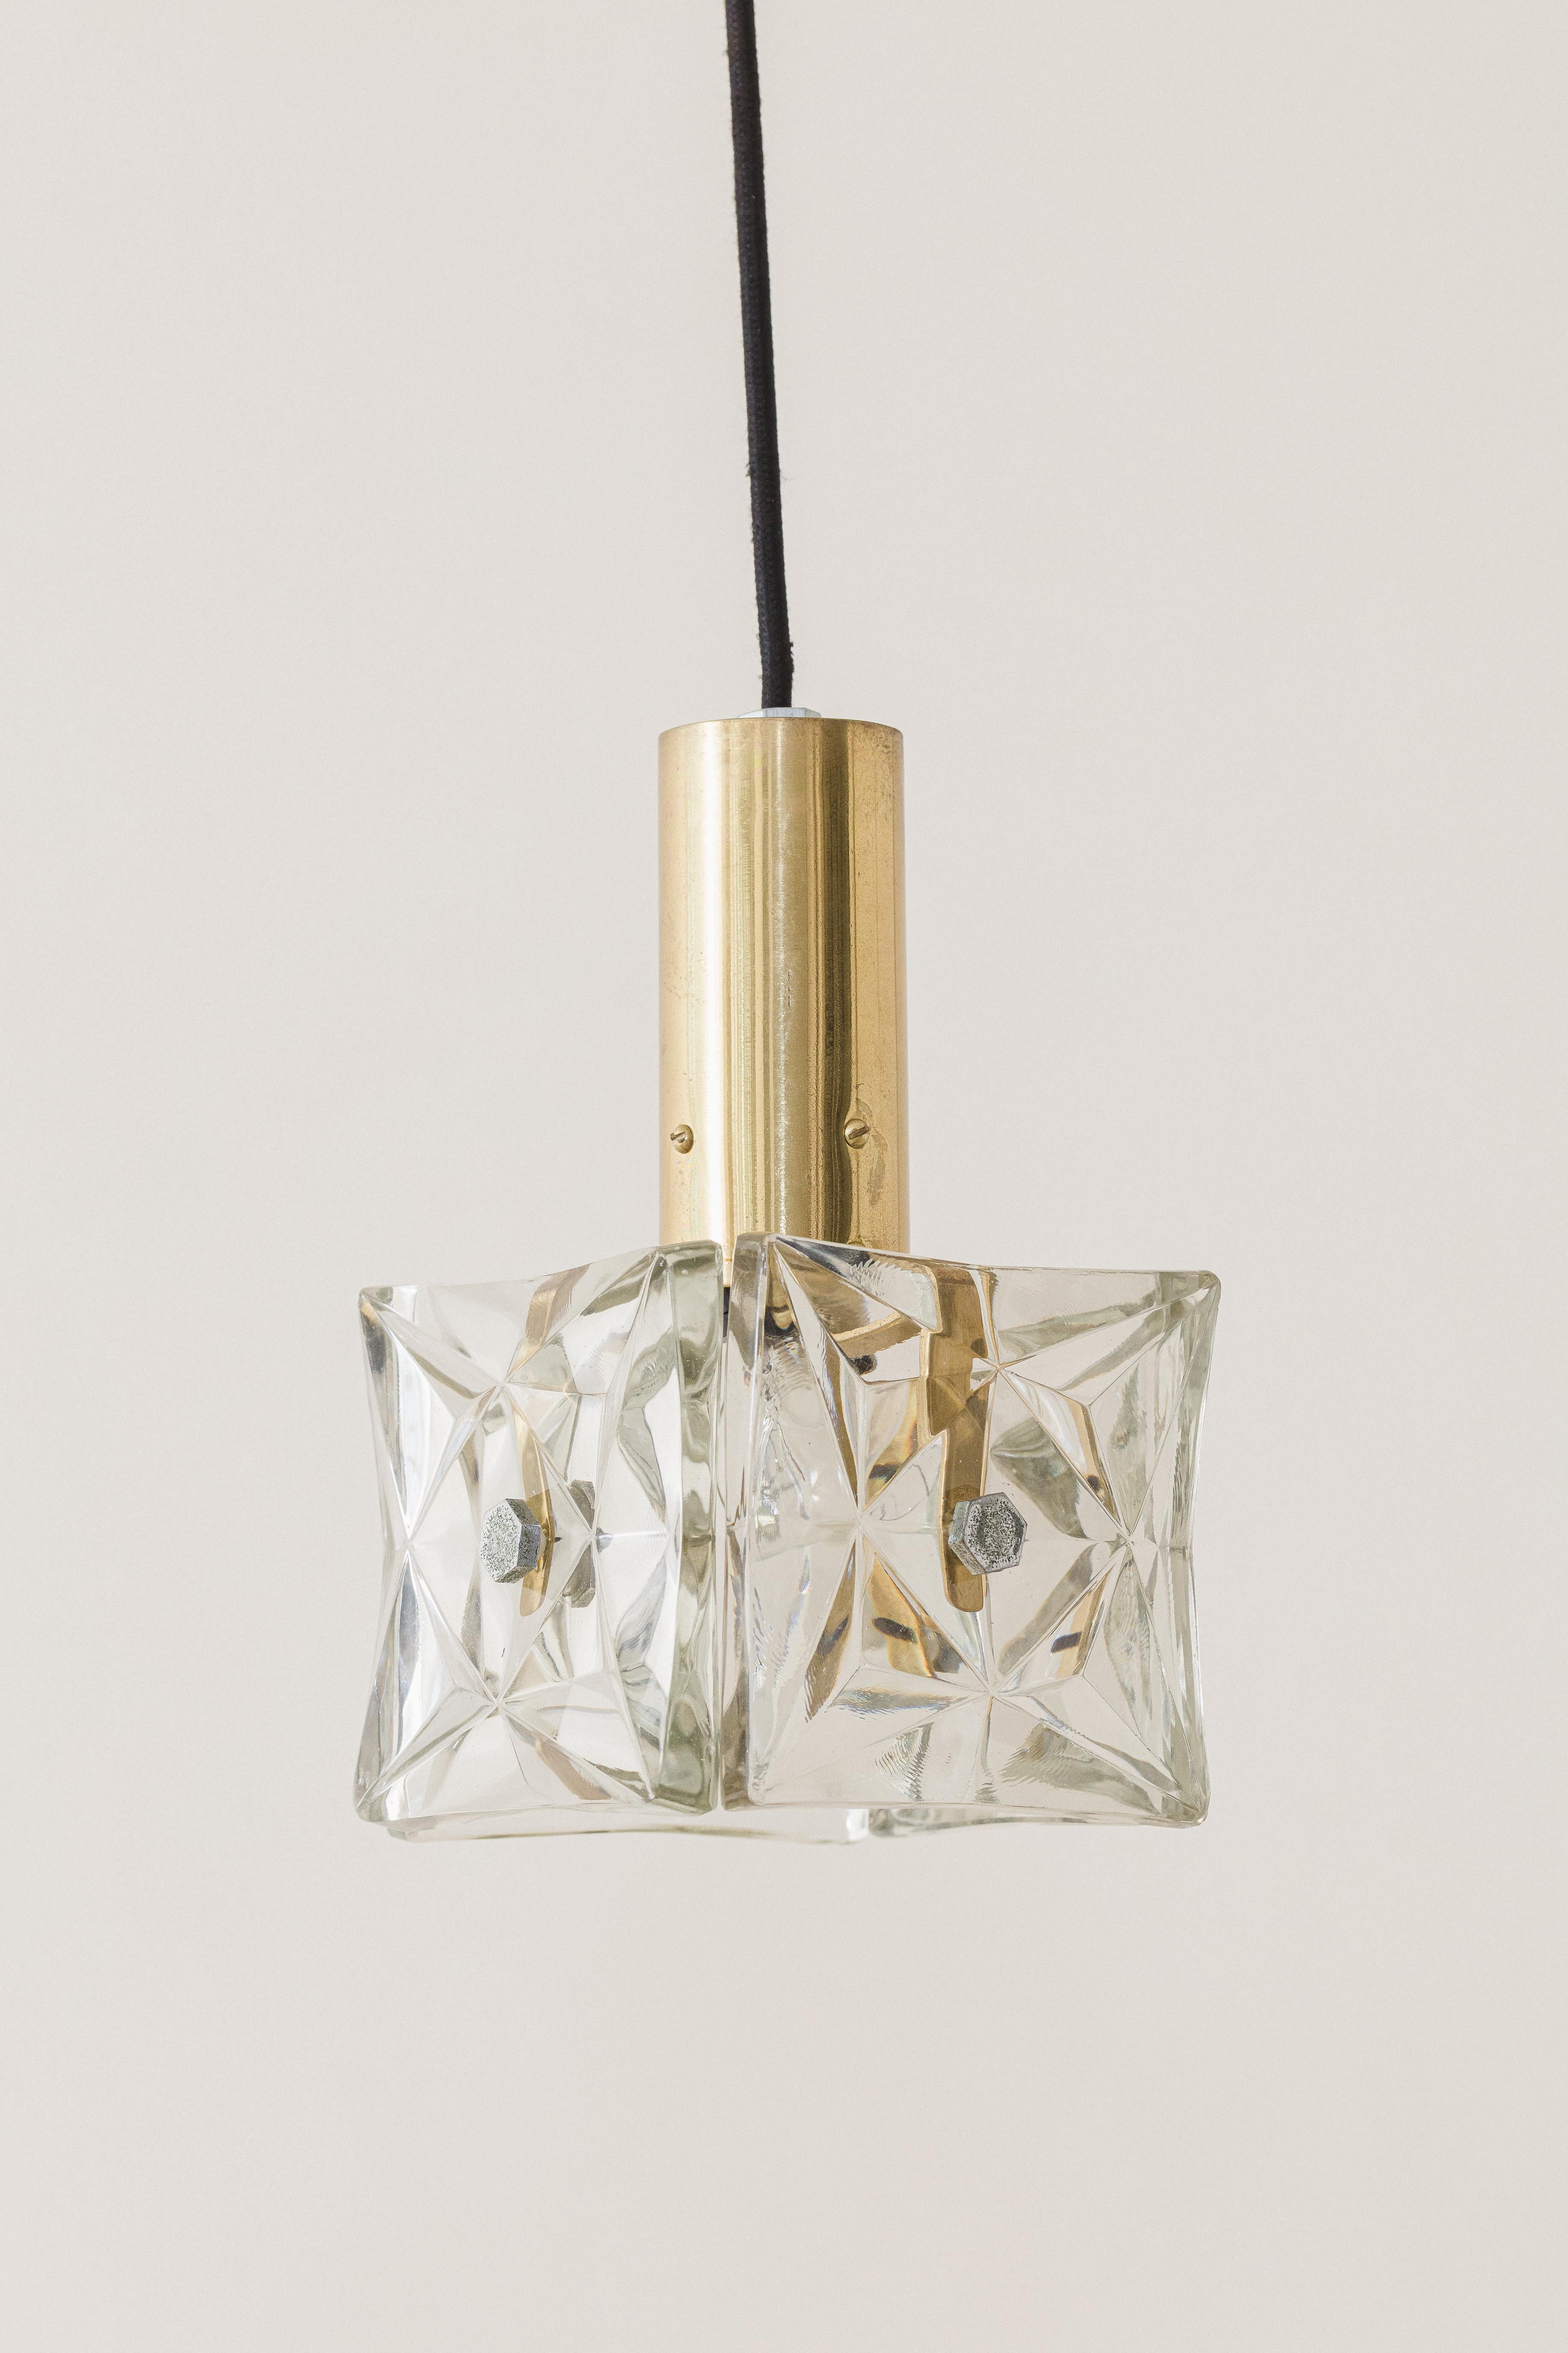 Pendant Lamp, Brass and Prismatic Glass, Lustres Pelotas Brazilian Design, 1950s For Sale 1